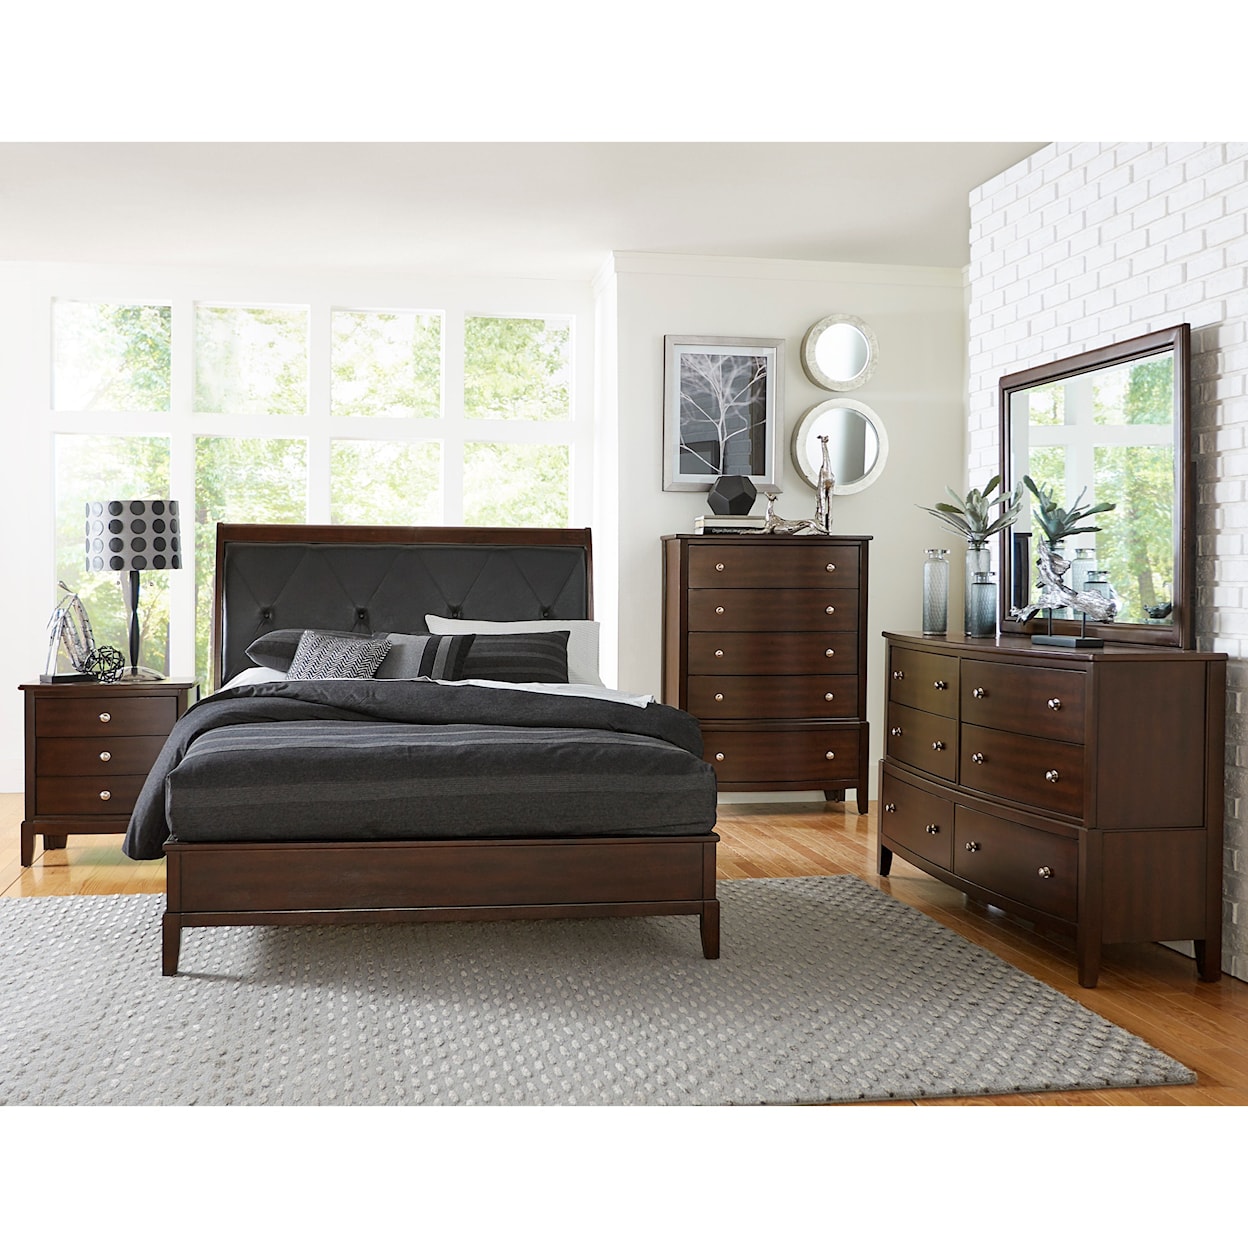 Homelegance Furniture Cotterill Queen Bedroom Group